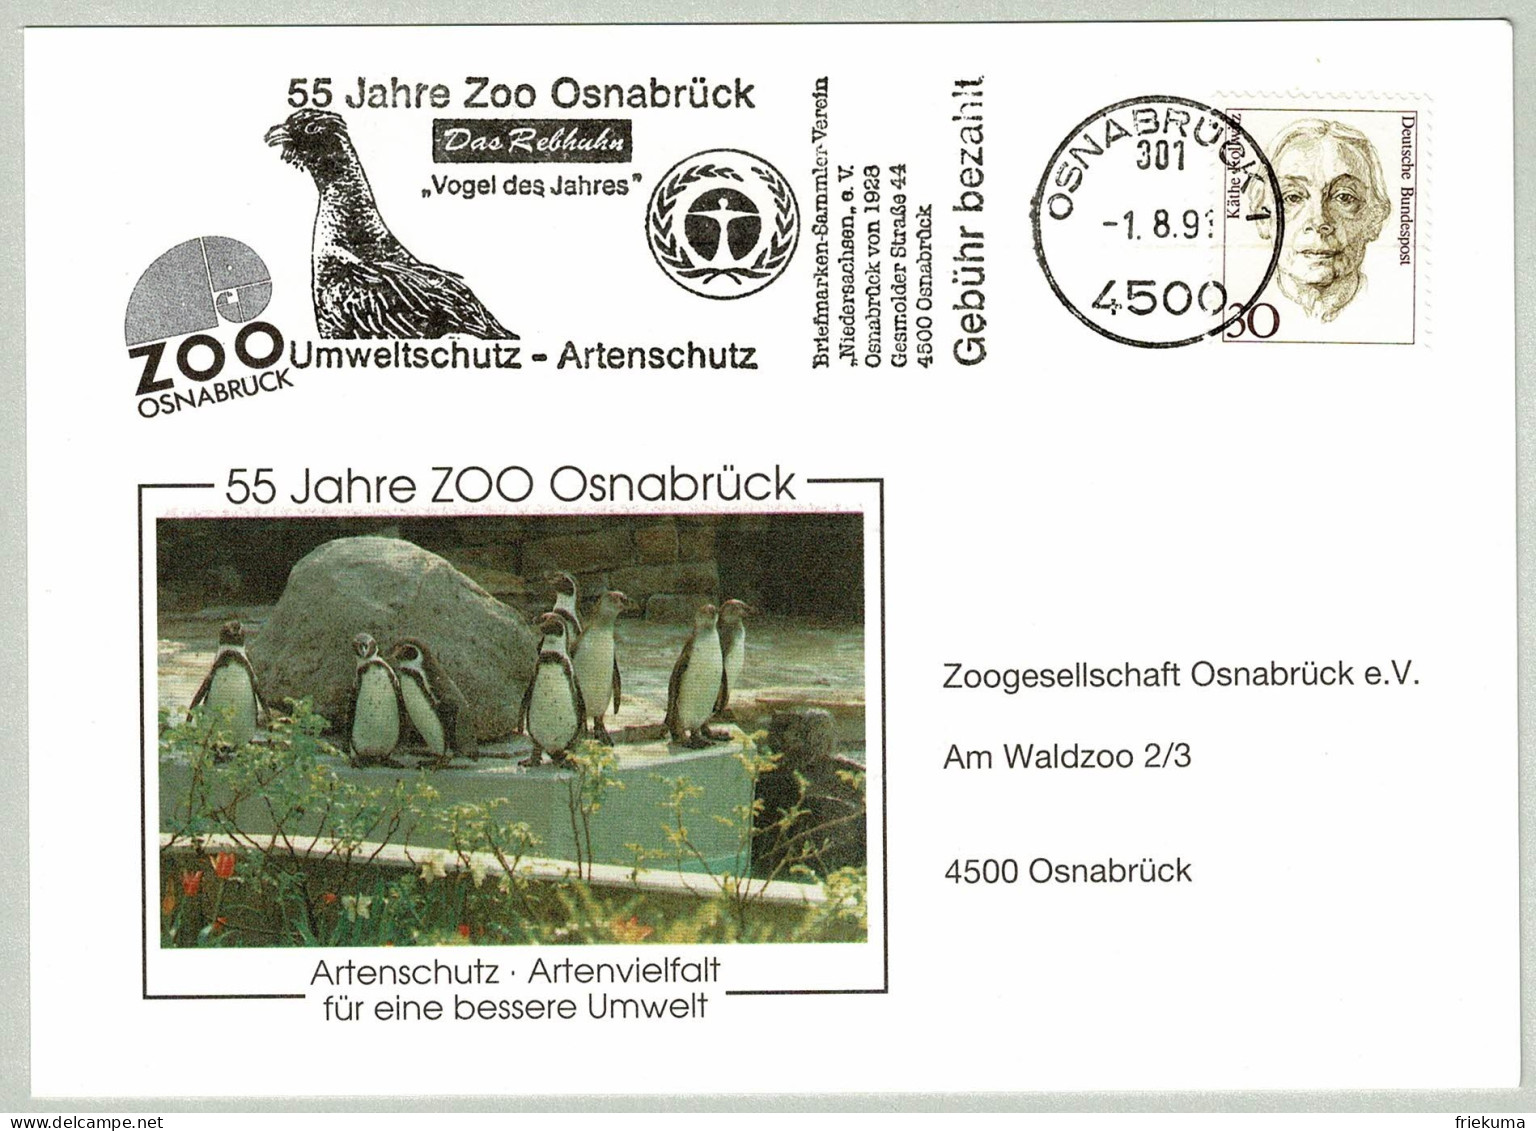 Deutsche Bundespost 1991, Postkarte Zoo Osnabrück, Rebhuhn / Perdrix / Partridge, Pinguin / Penguin - Grey Partridge